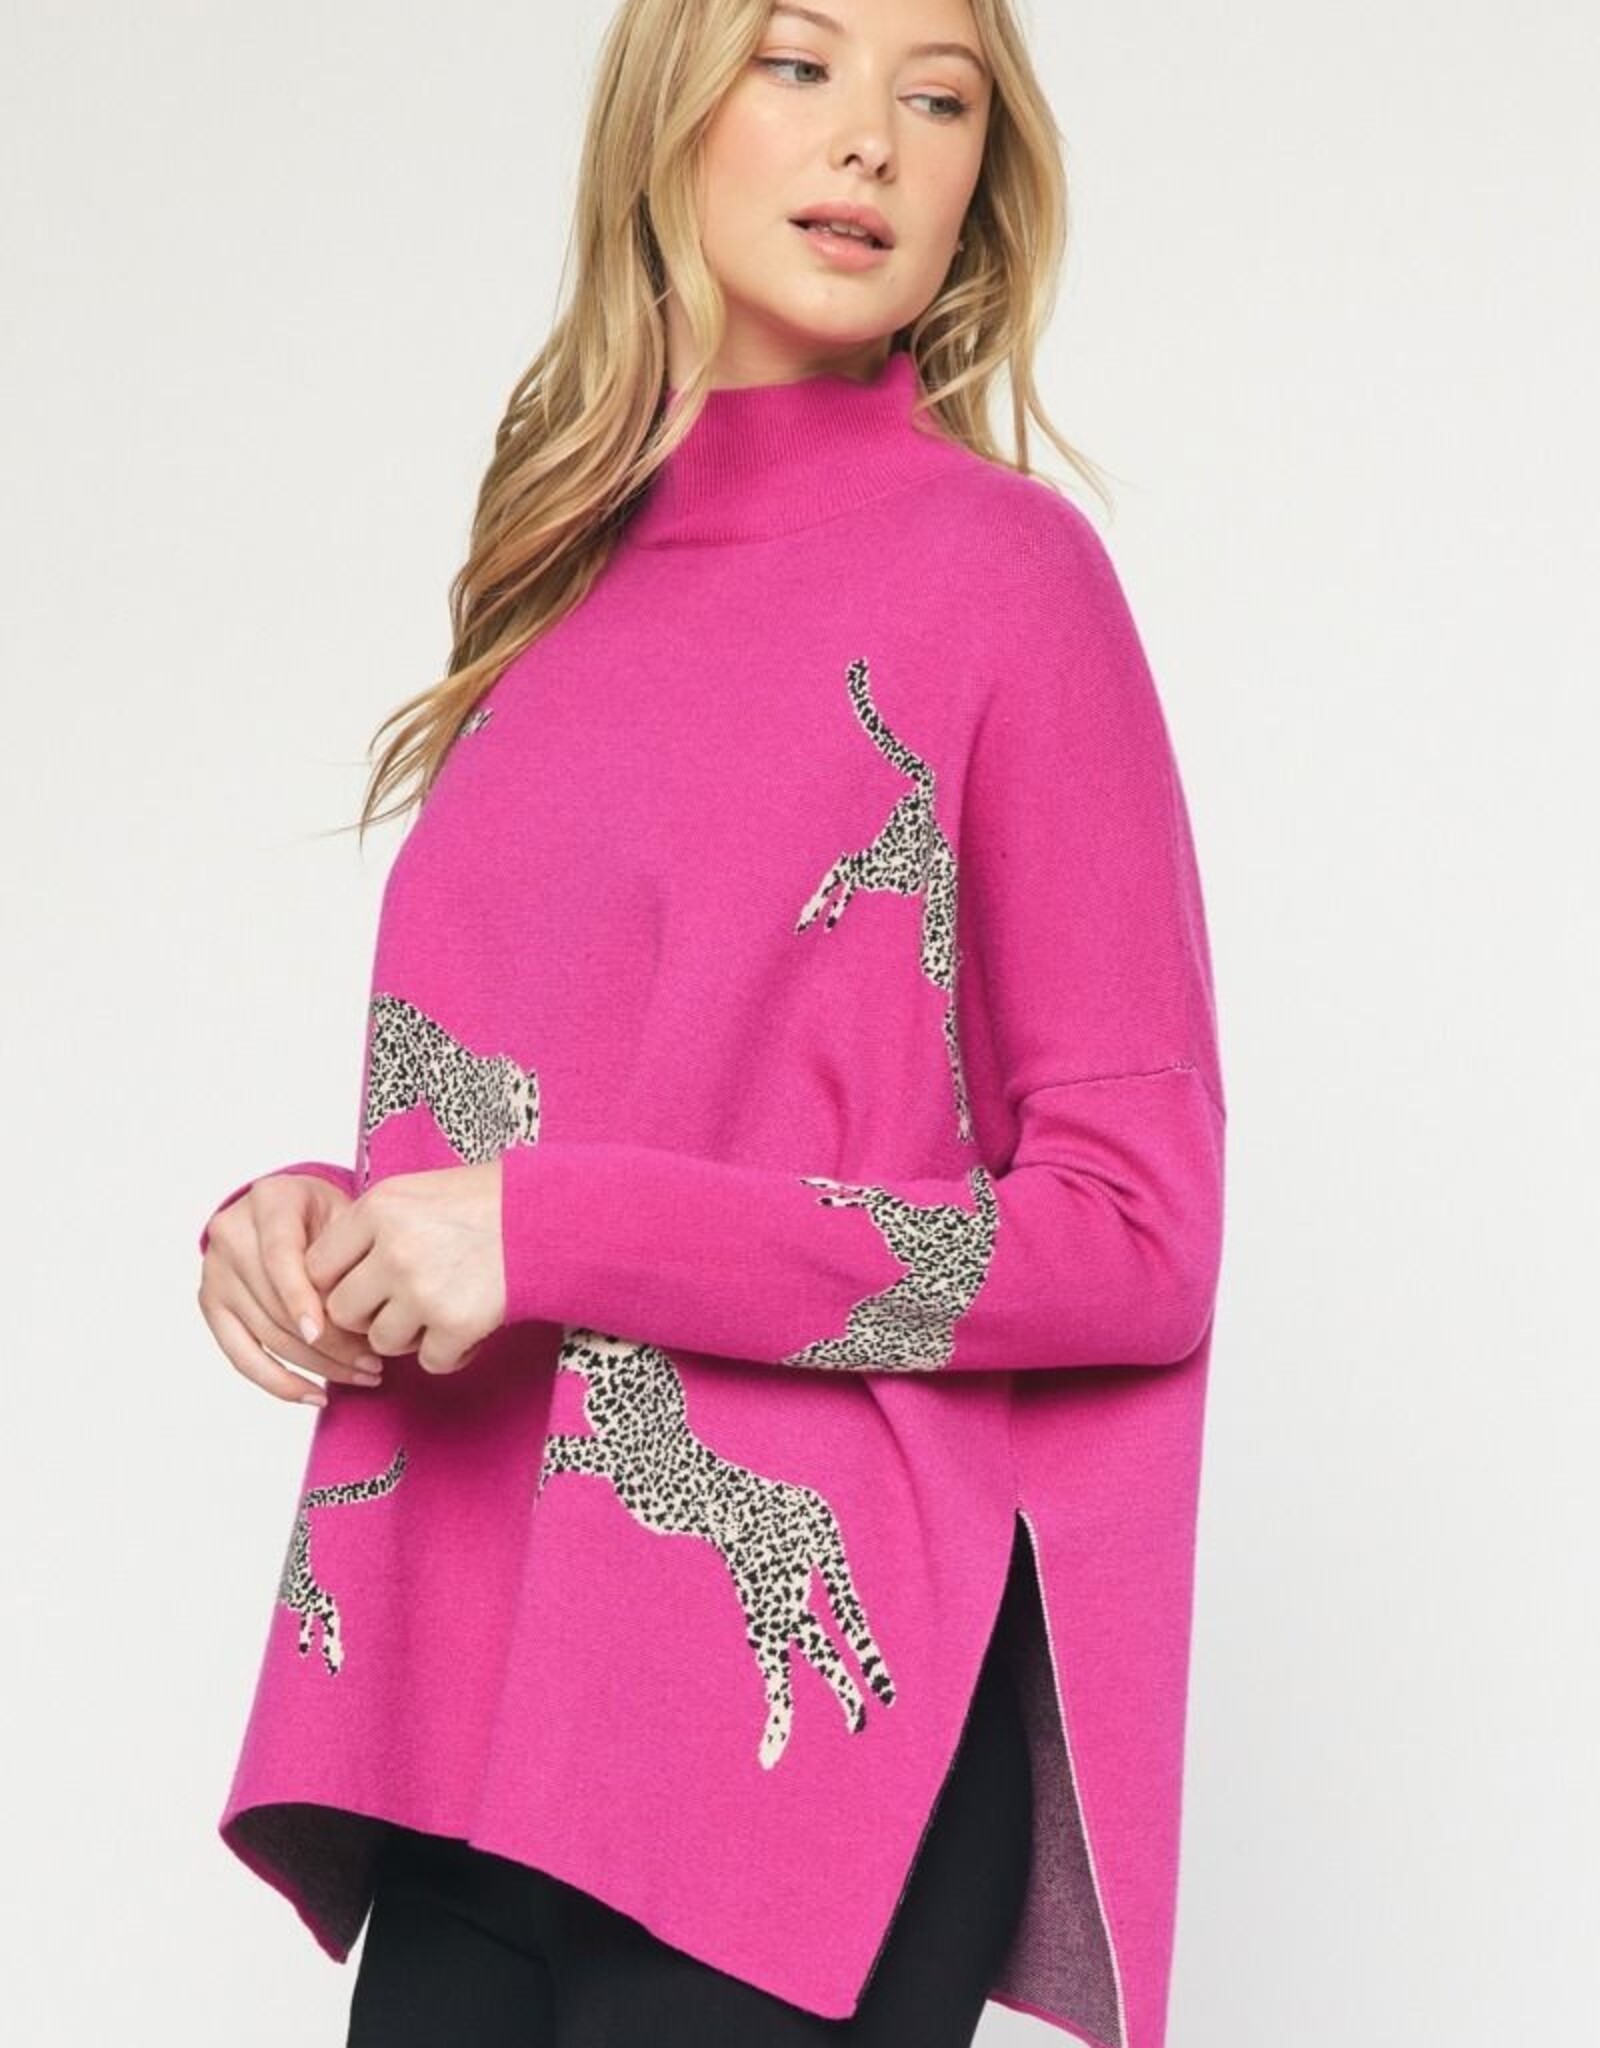 Cheetah Love Sweater